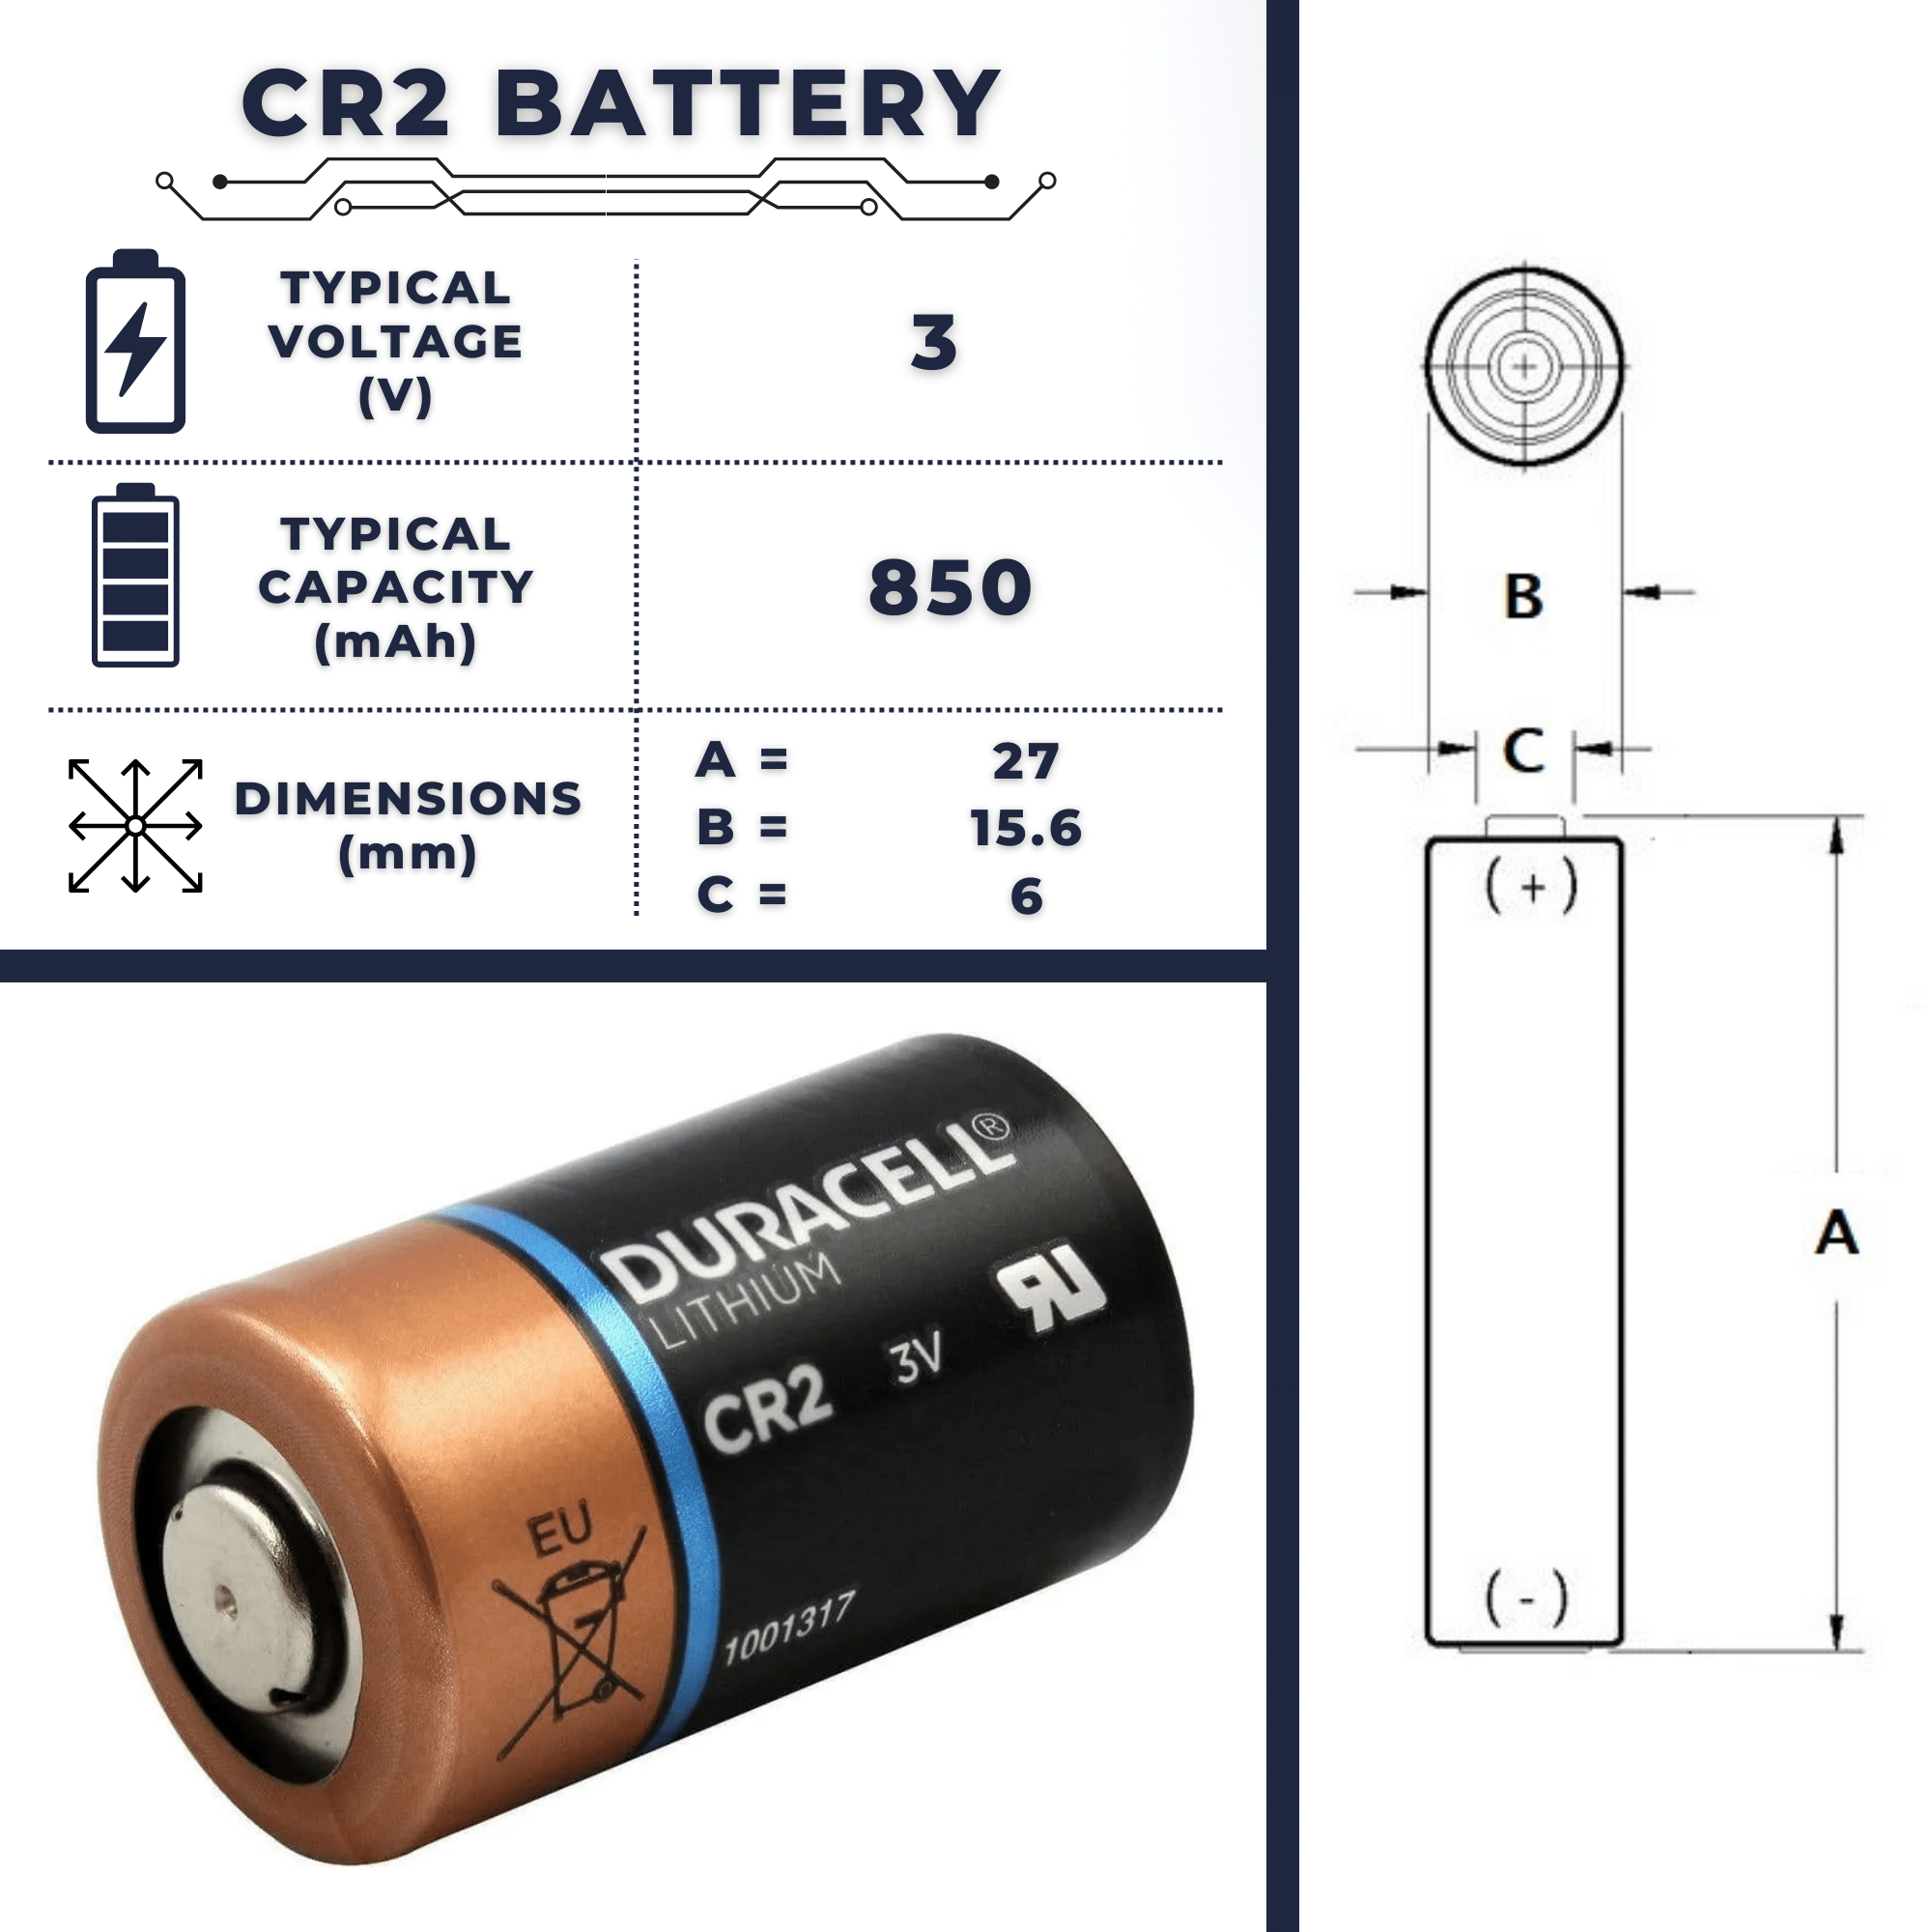 Maxell - Pila CR2025 - Voltaje 3.0 V - Litio - Capacidad nominal